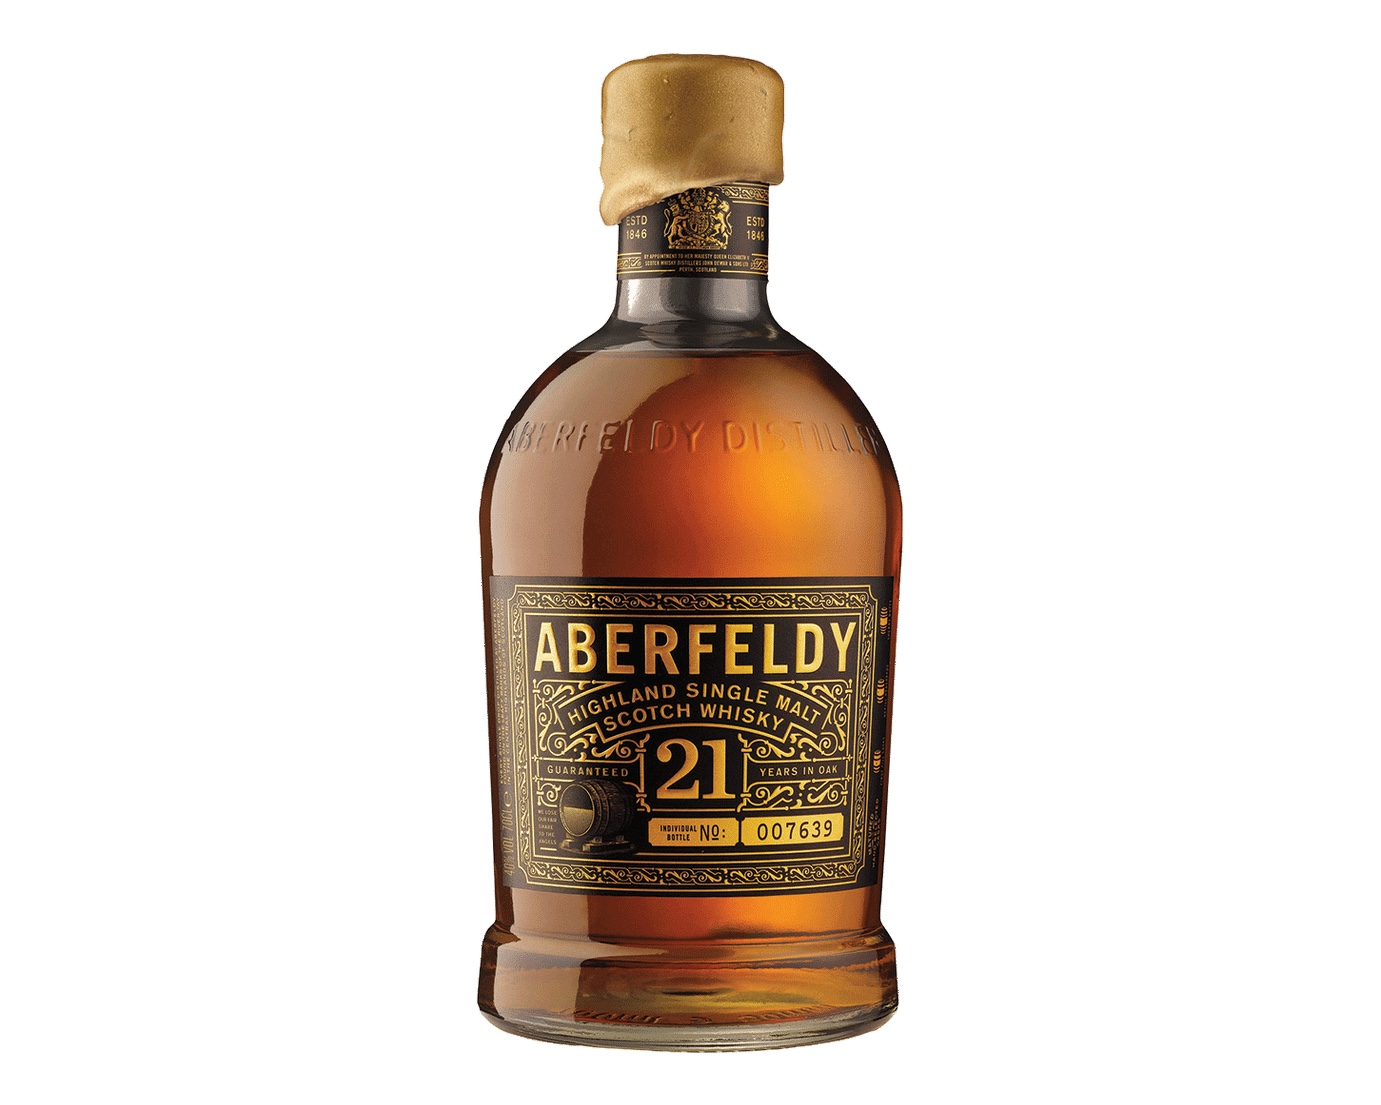 ABERFELDY Single Malt Scotch Whisky